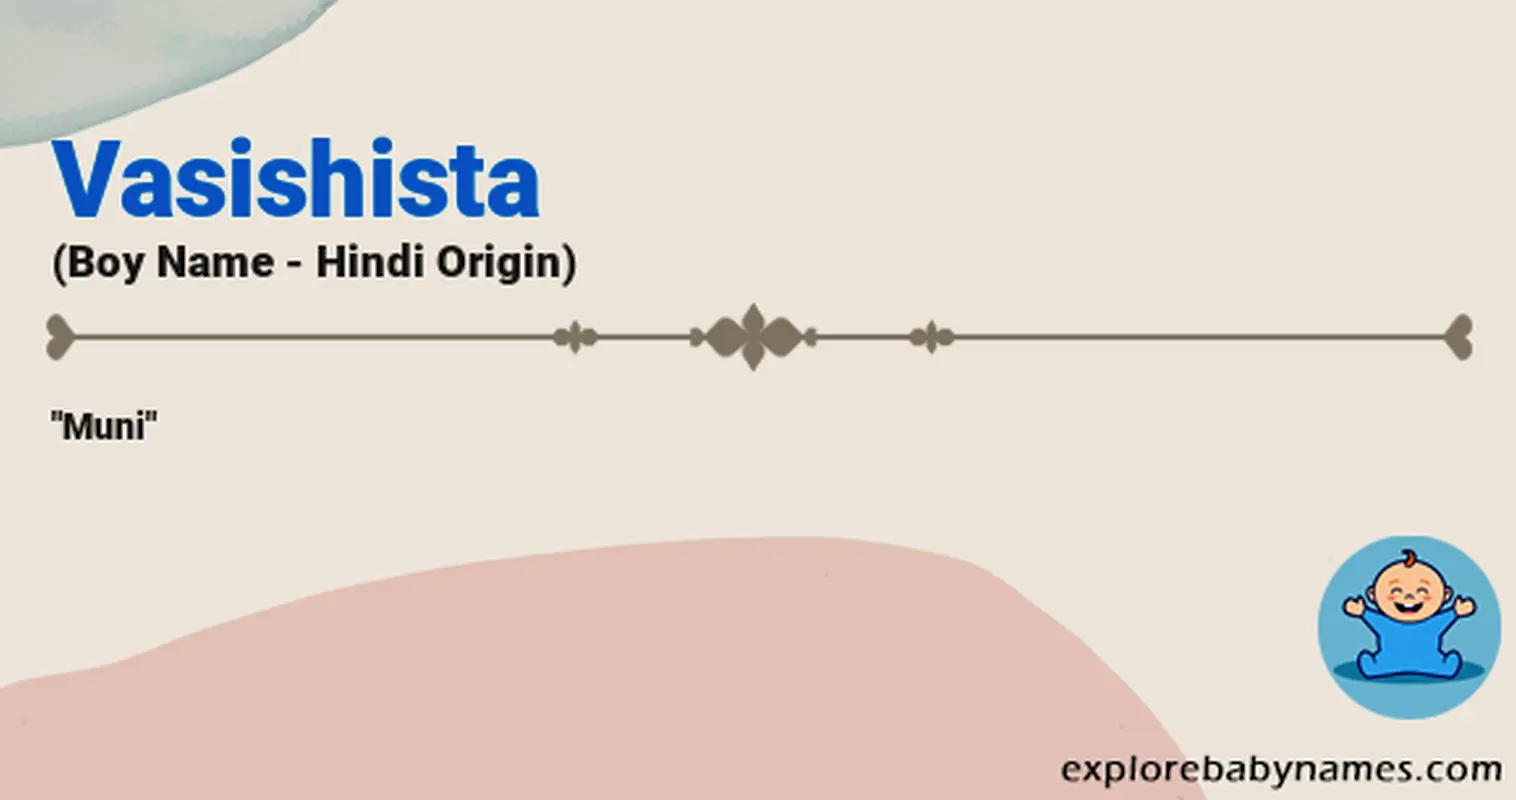 Meaning of Vasishista